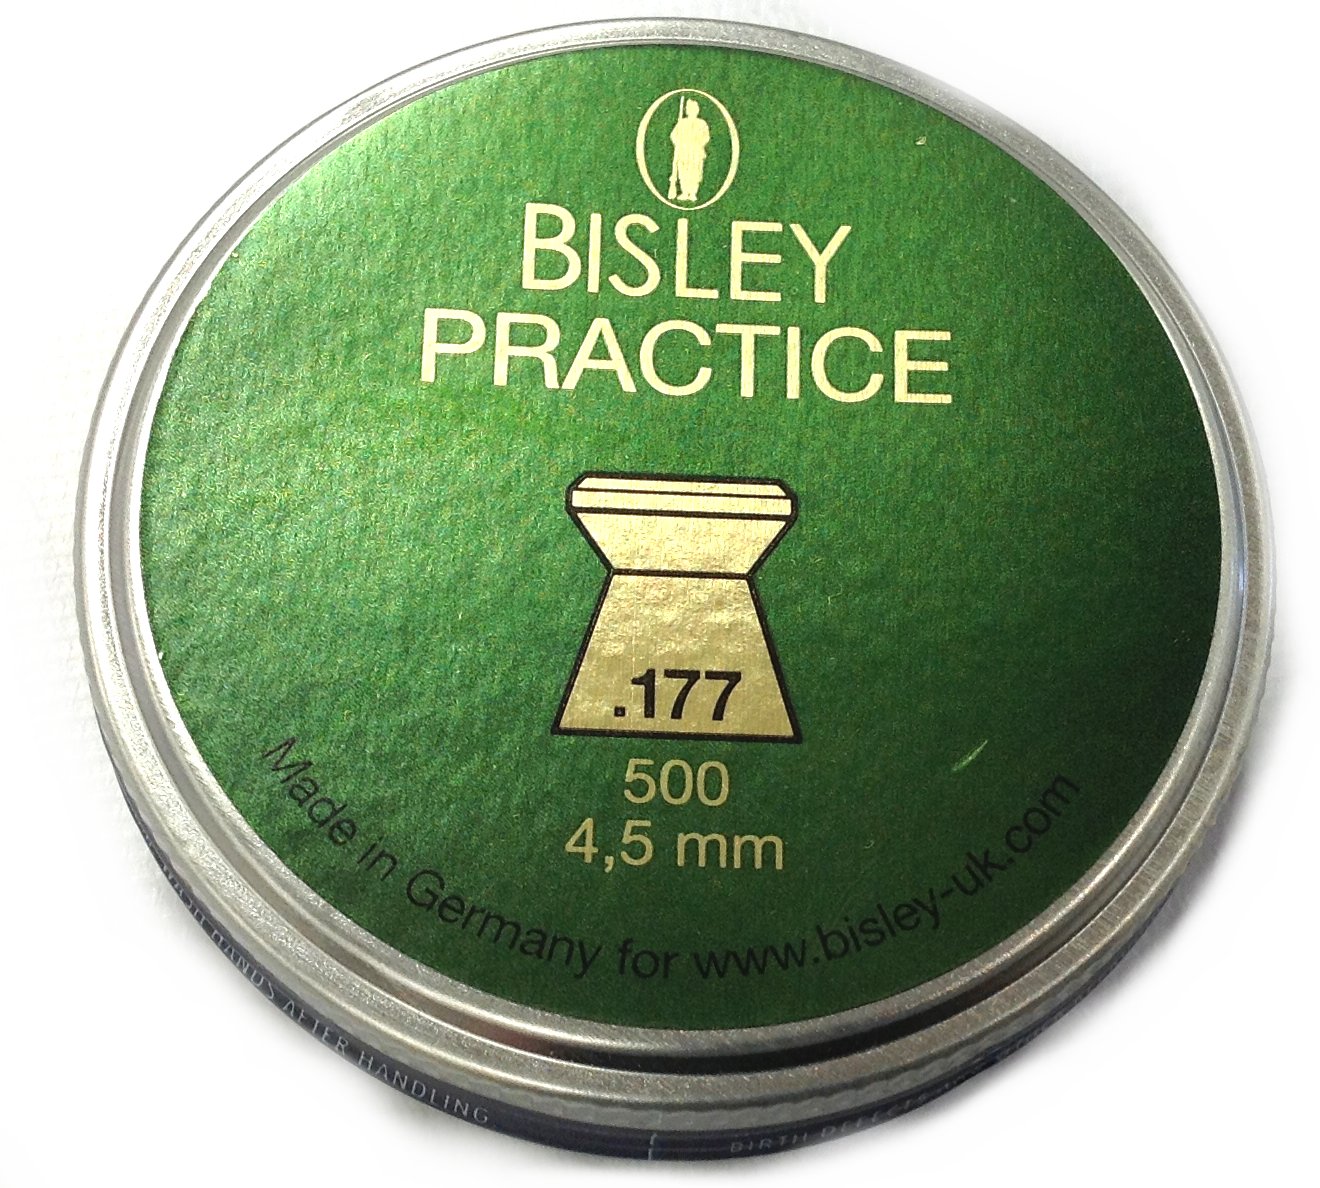 Bisley Practice .177 Wad-Cutter Pellets